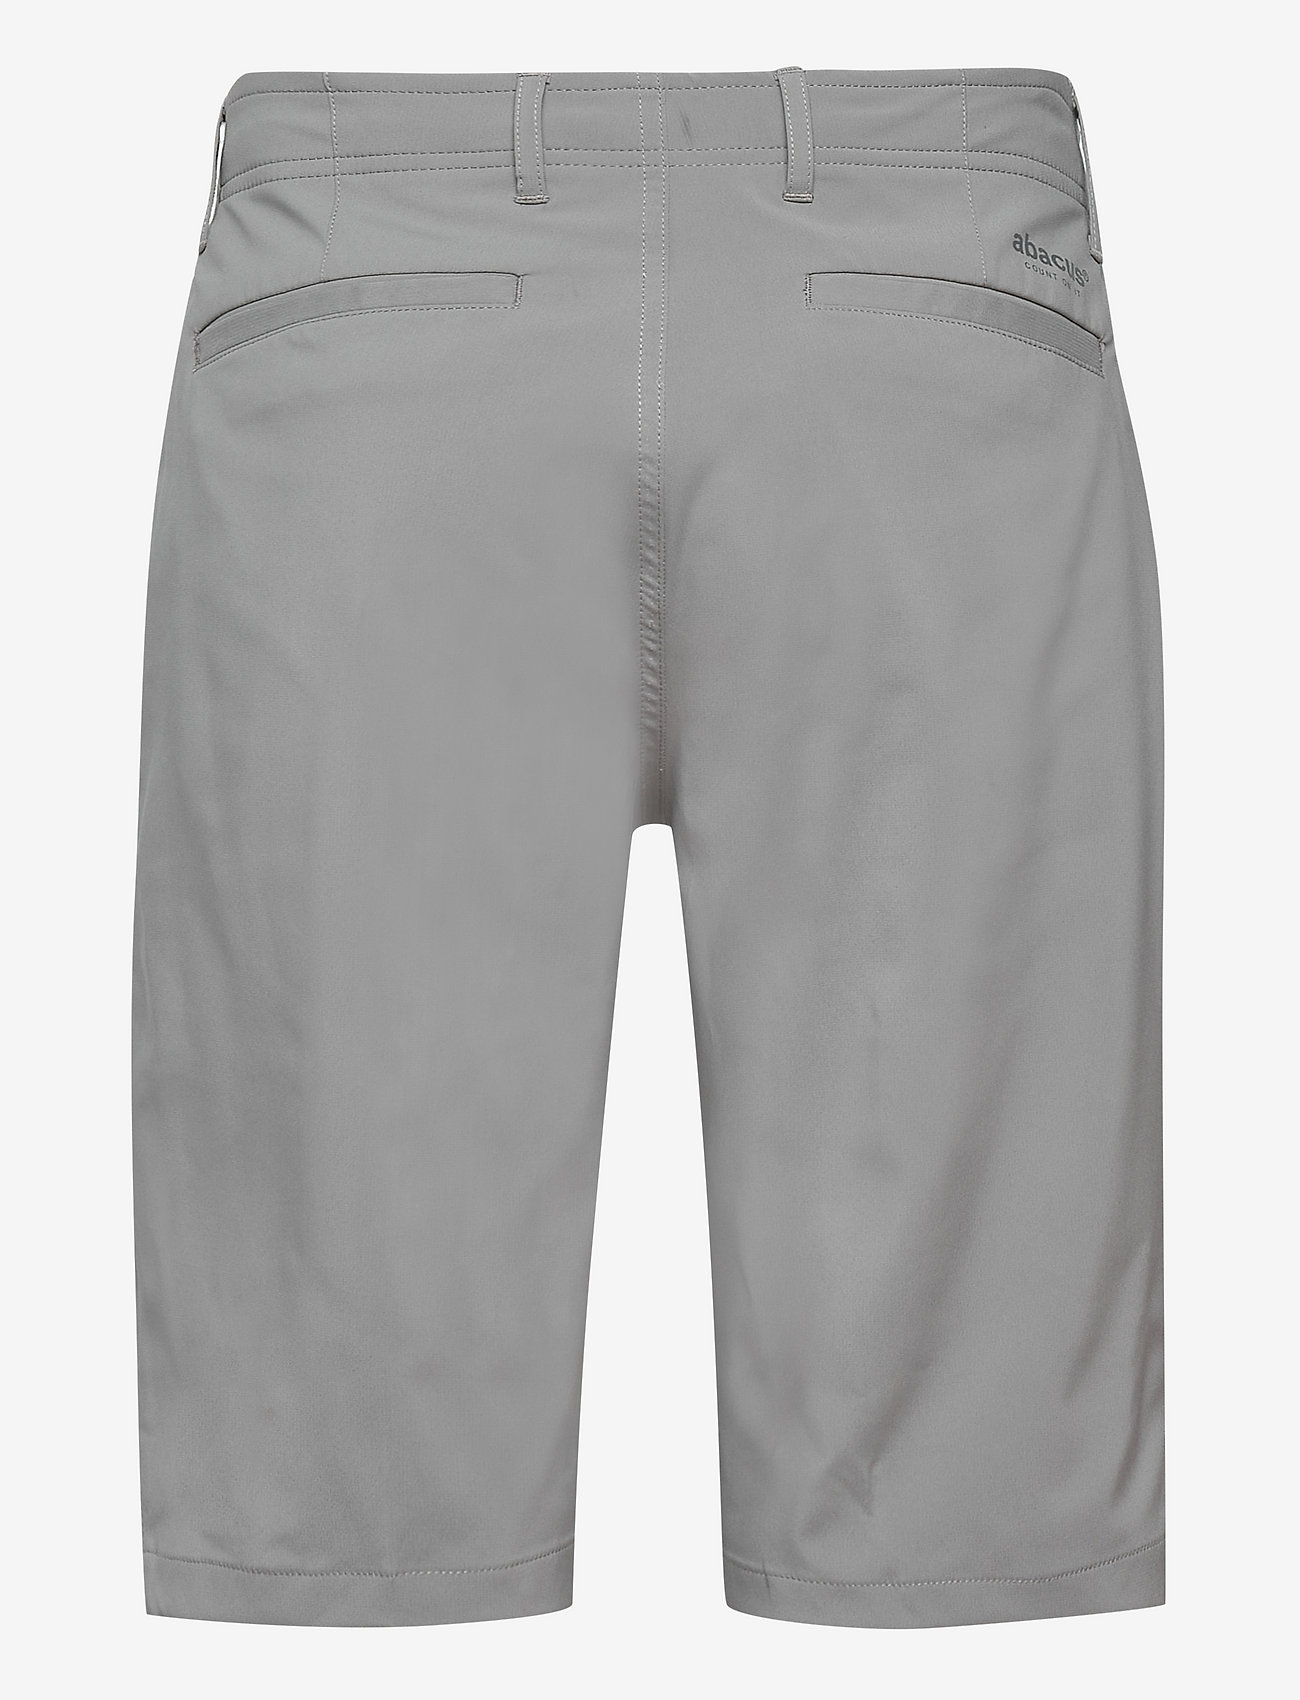 Abacus - Men Cleek flex shorts - szorty golfowe - grey - 1